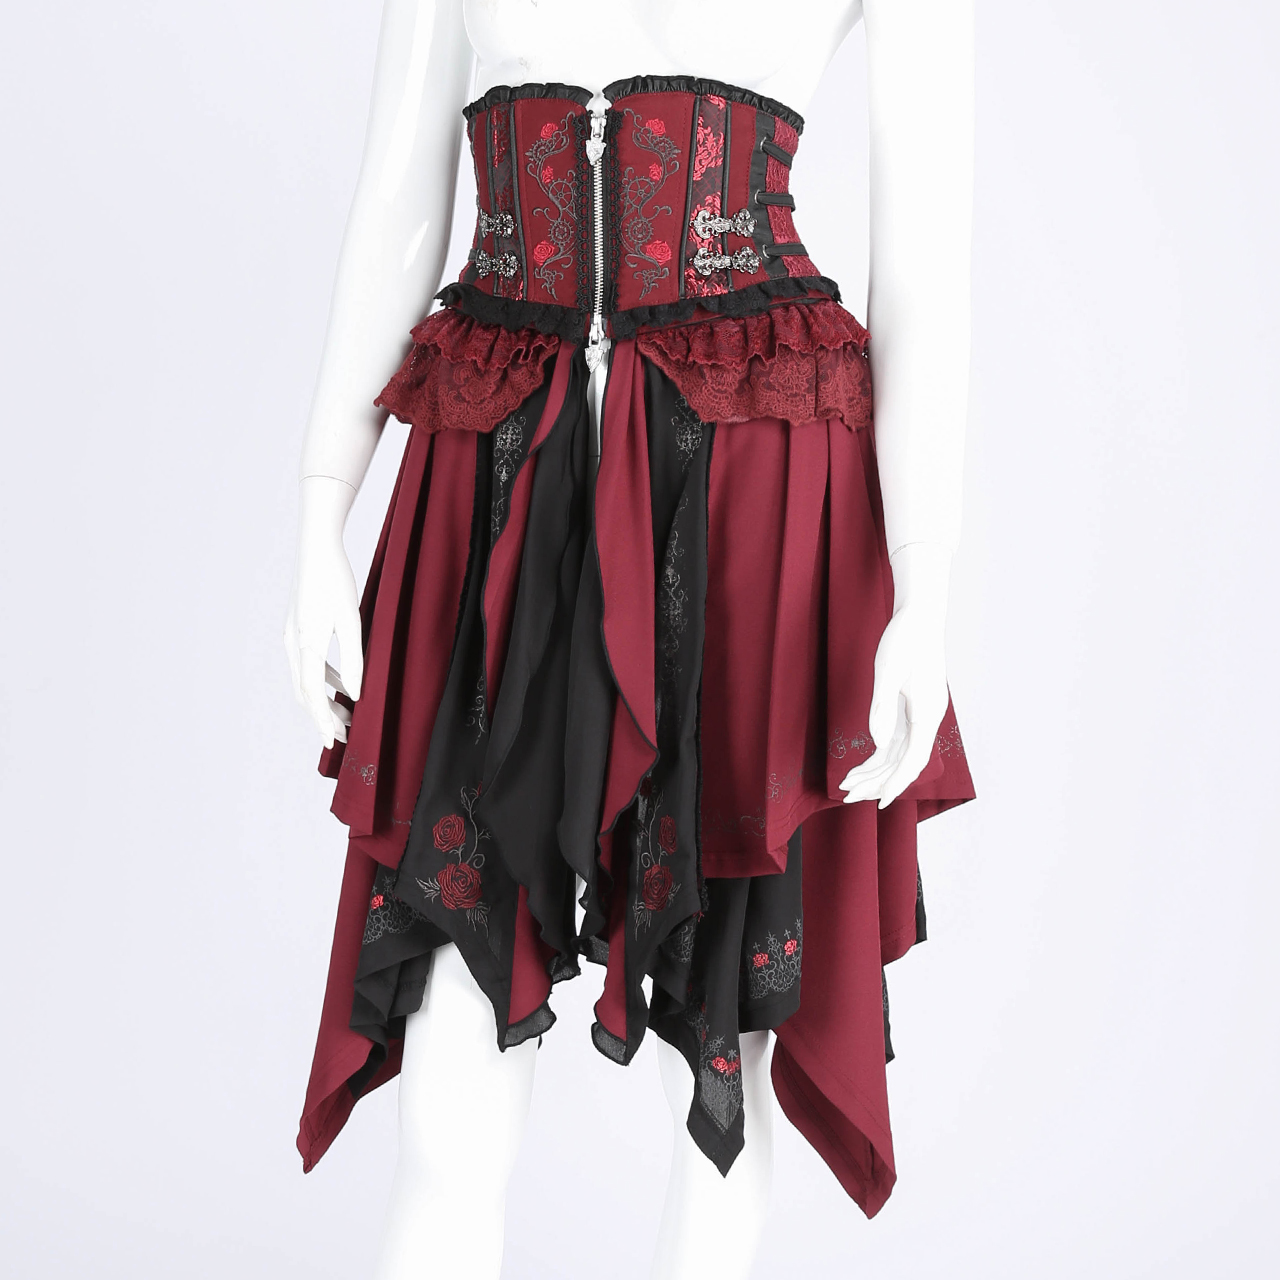 Broken dawn rose corset skirt 3446601o